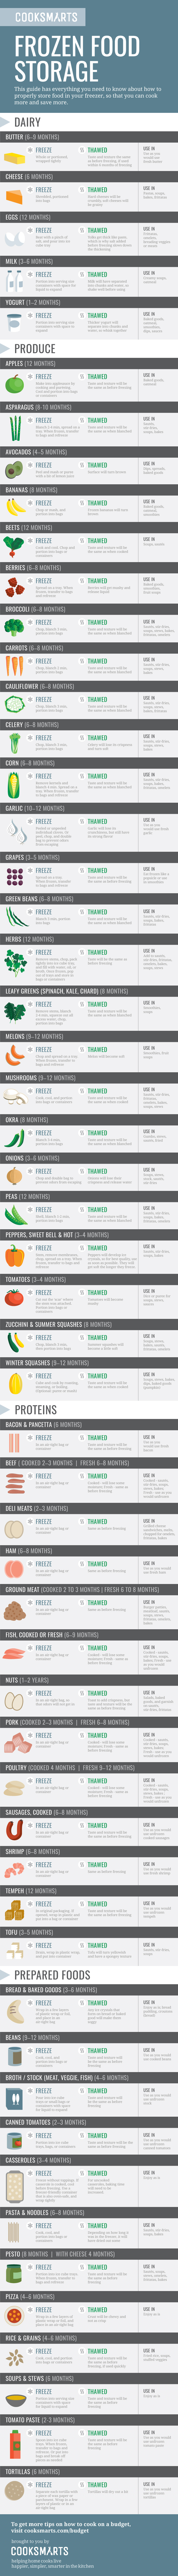 Cook Smarts Guide to Frozen Food Storage & Freezer Shelf Life